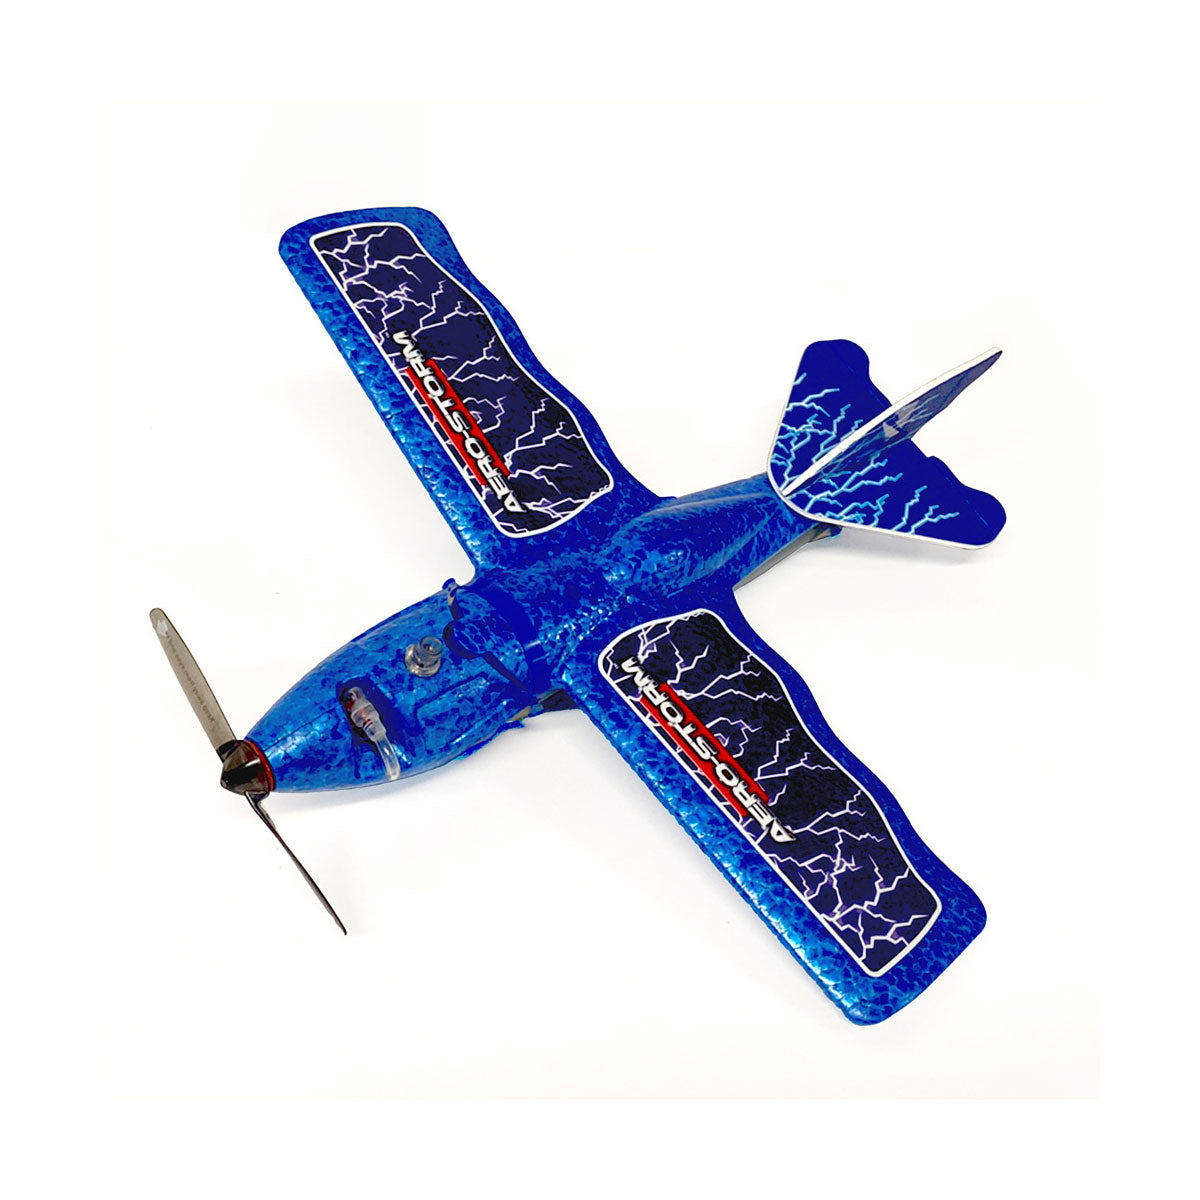 Aero-Storm Aerobatic Stunt Plane Blue